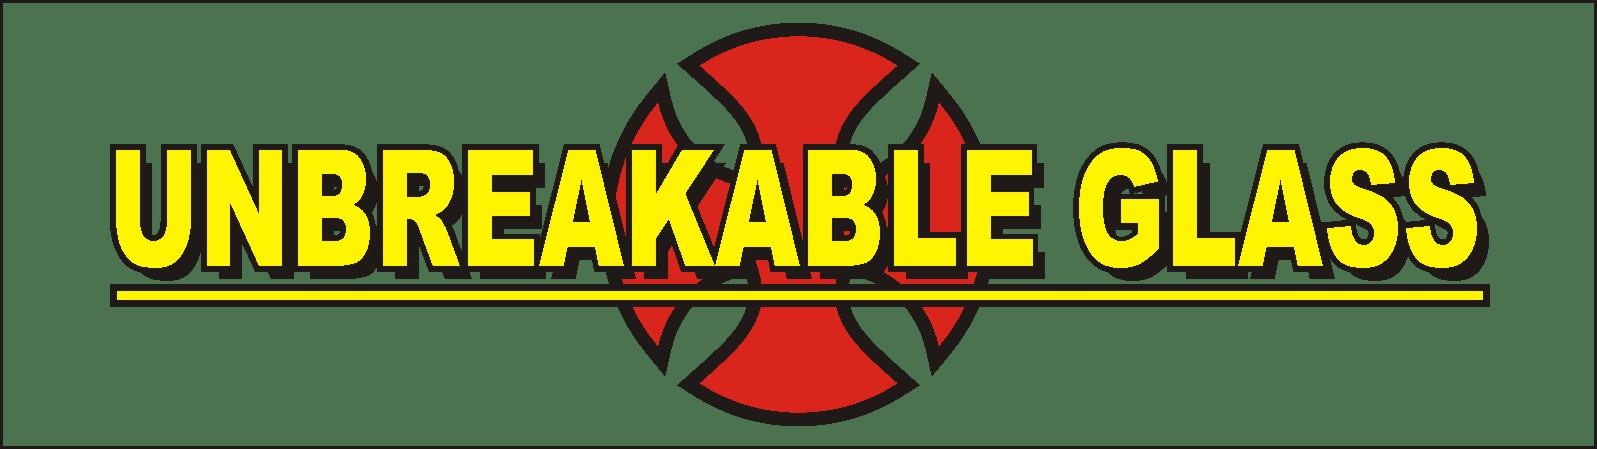 Unbreakable Glass